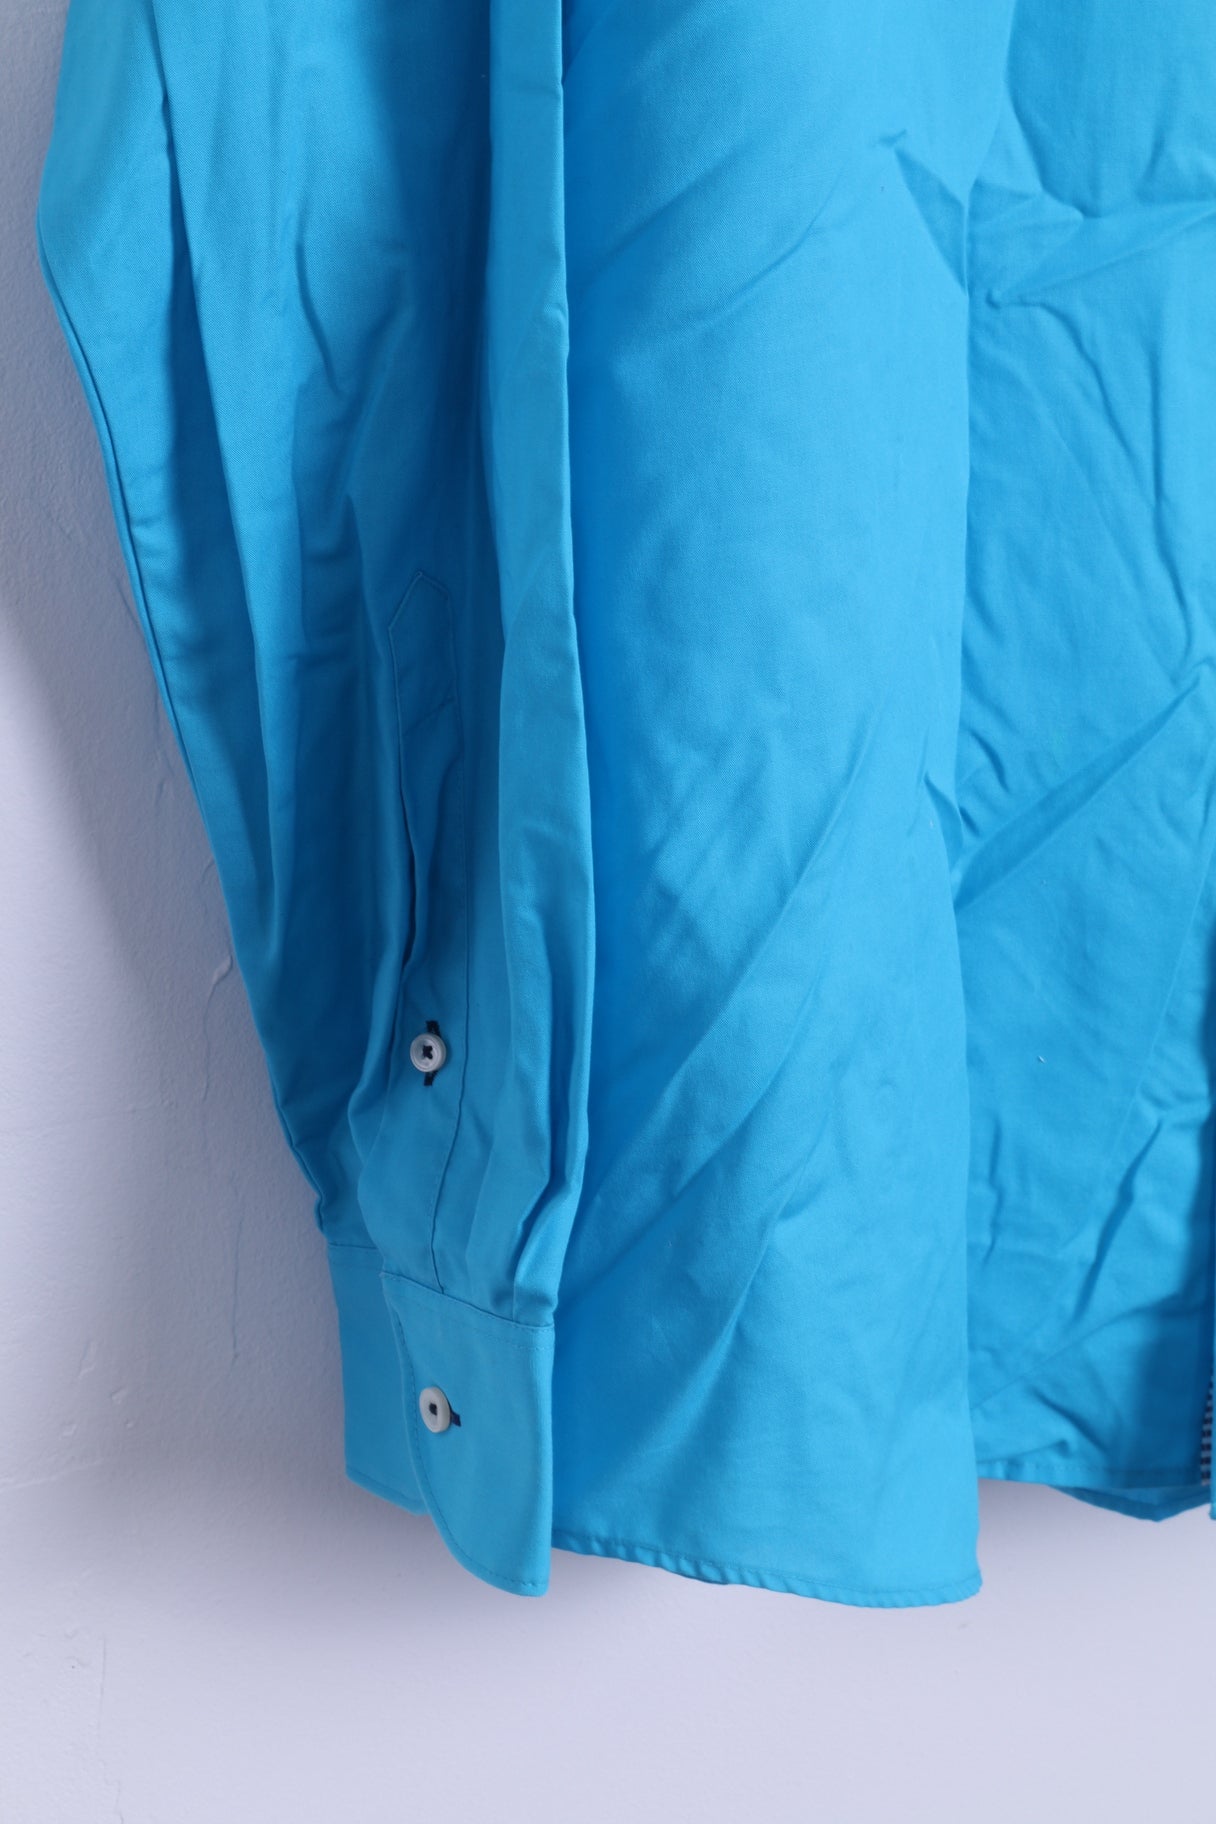 Bruno Banani Mens 43/44 L/XL Casual Shirt Blue Cotton Long Sleeve